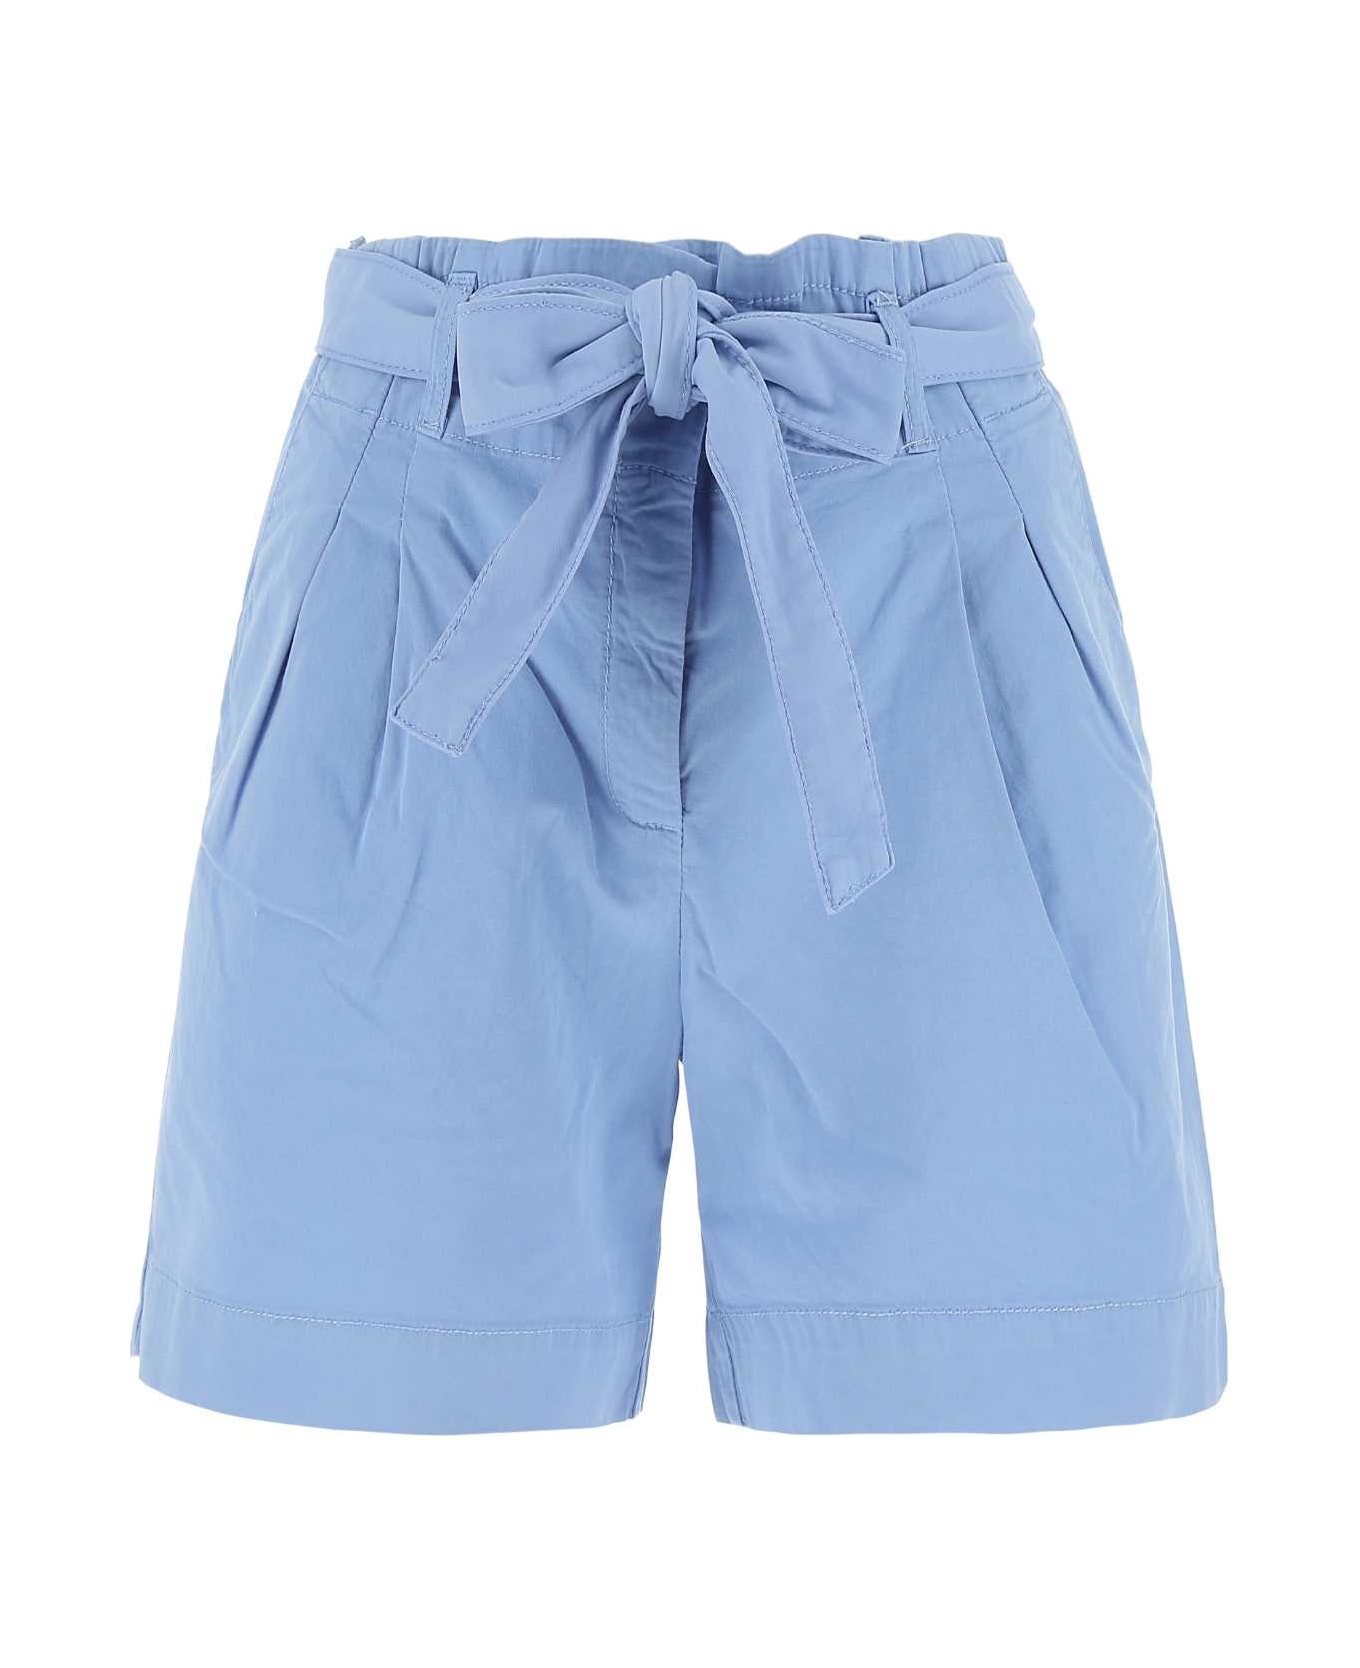 Saint James Light-blue Stretch Cotton Linda Bermuda Shorts - OXYGENE ショートパンツ